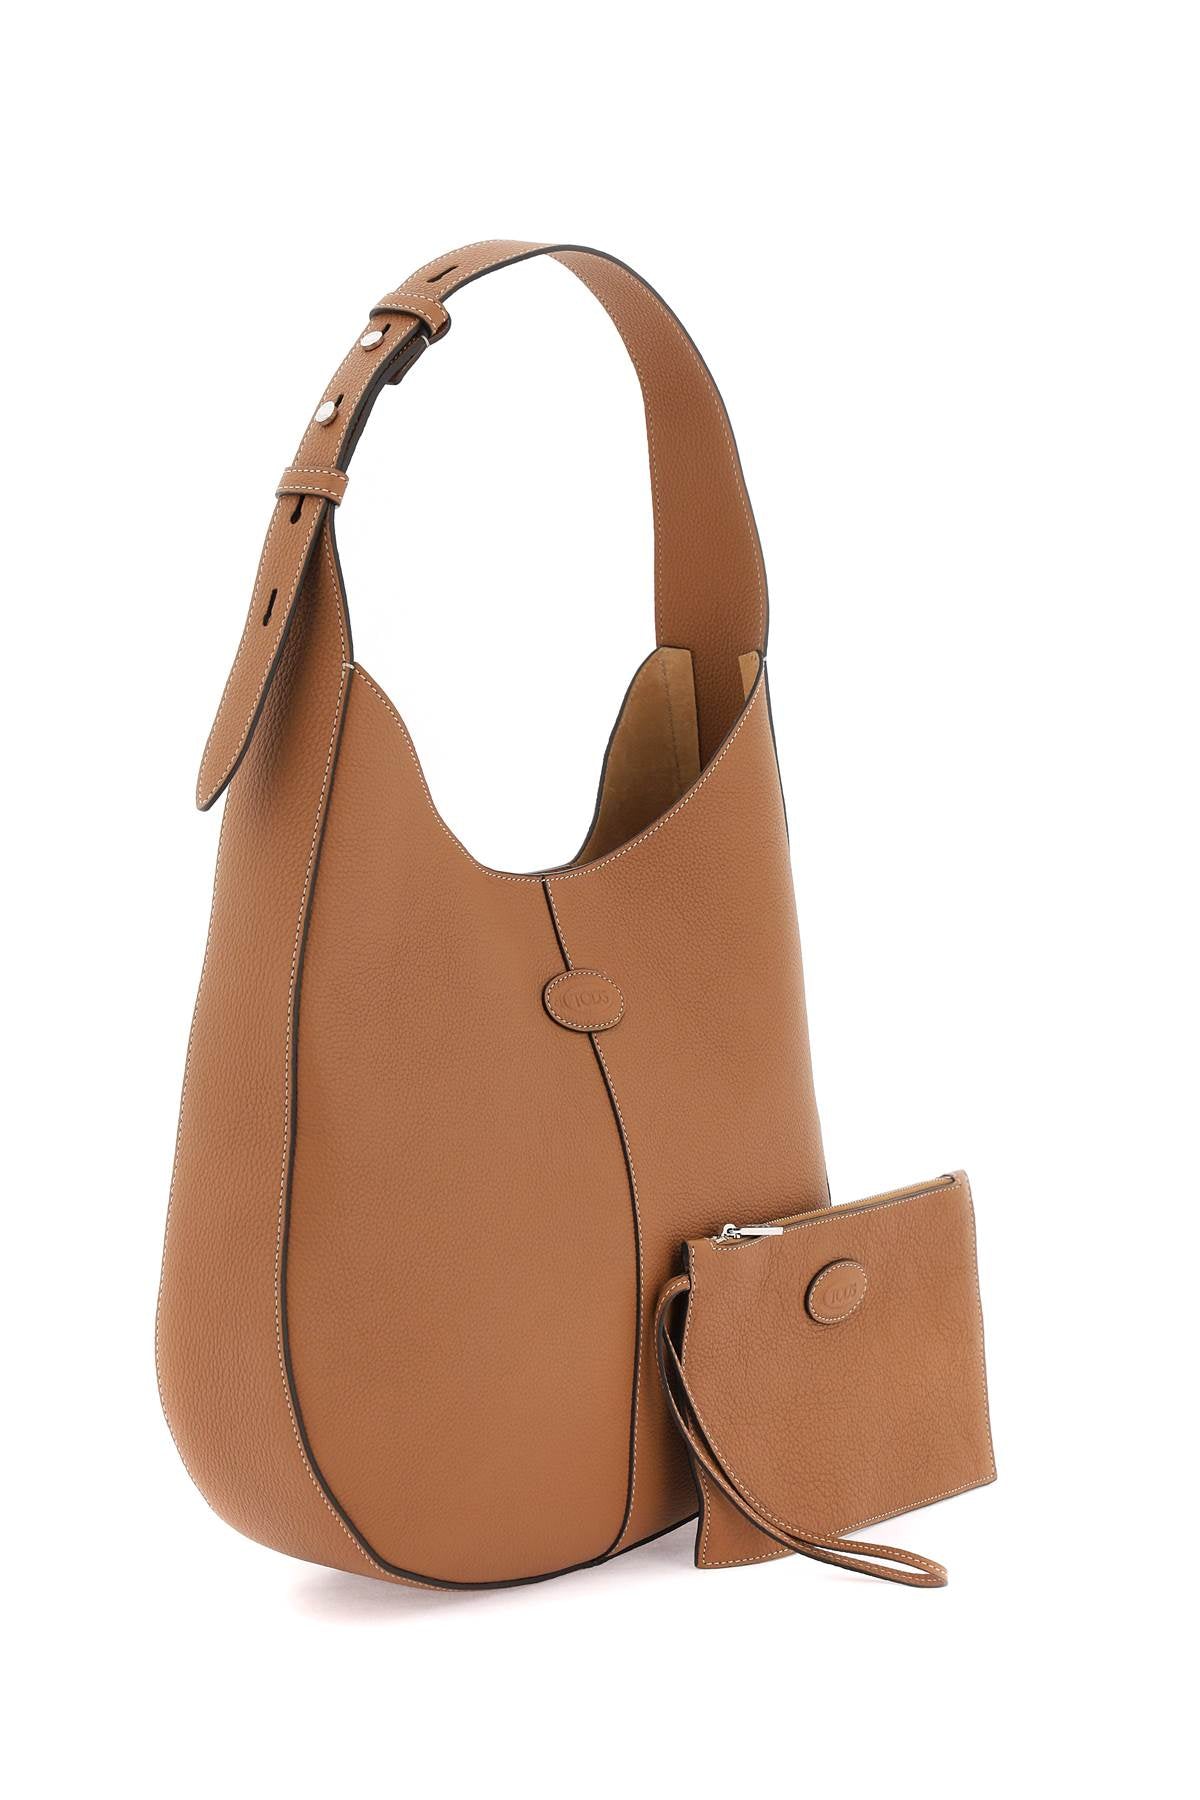 TOD'S Sophisticated Grained Leather Hobo Handbag for Women